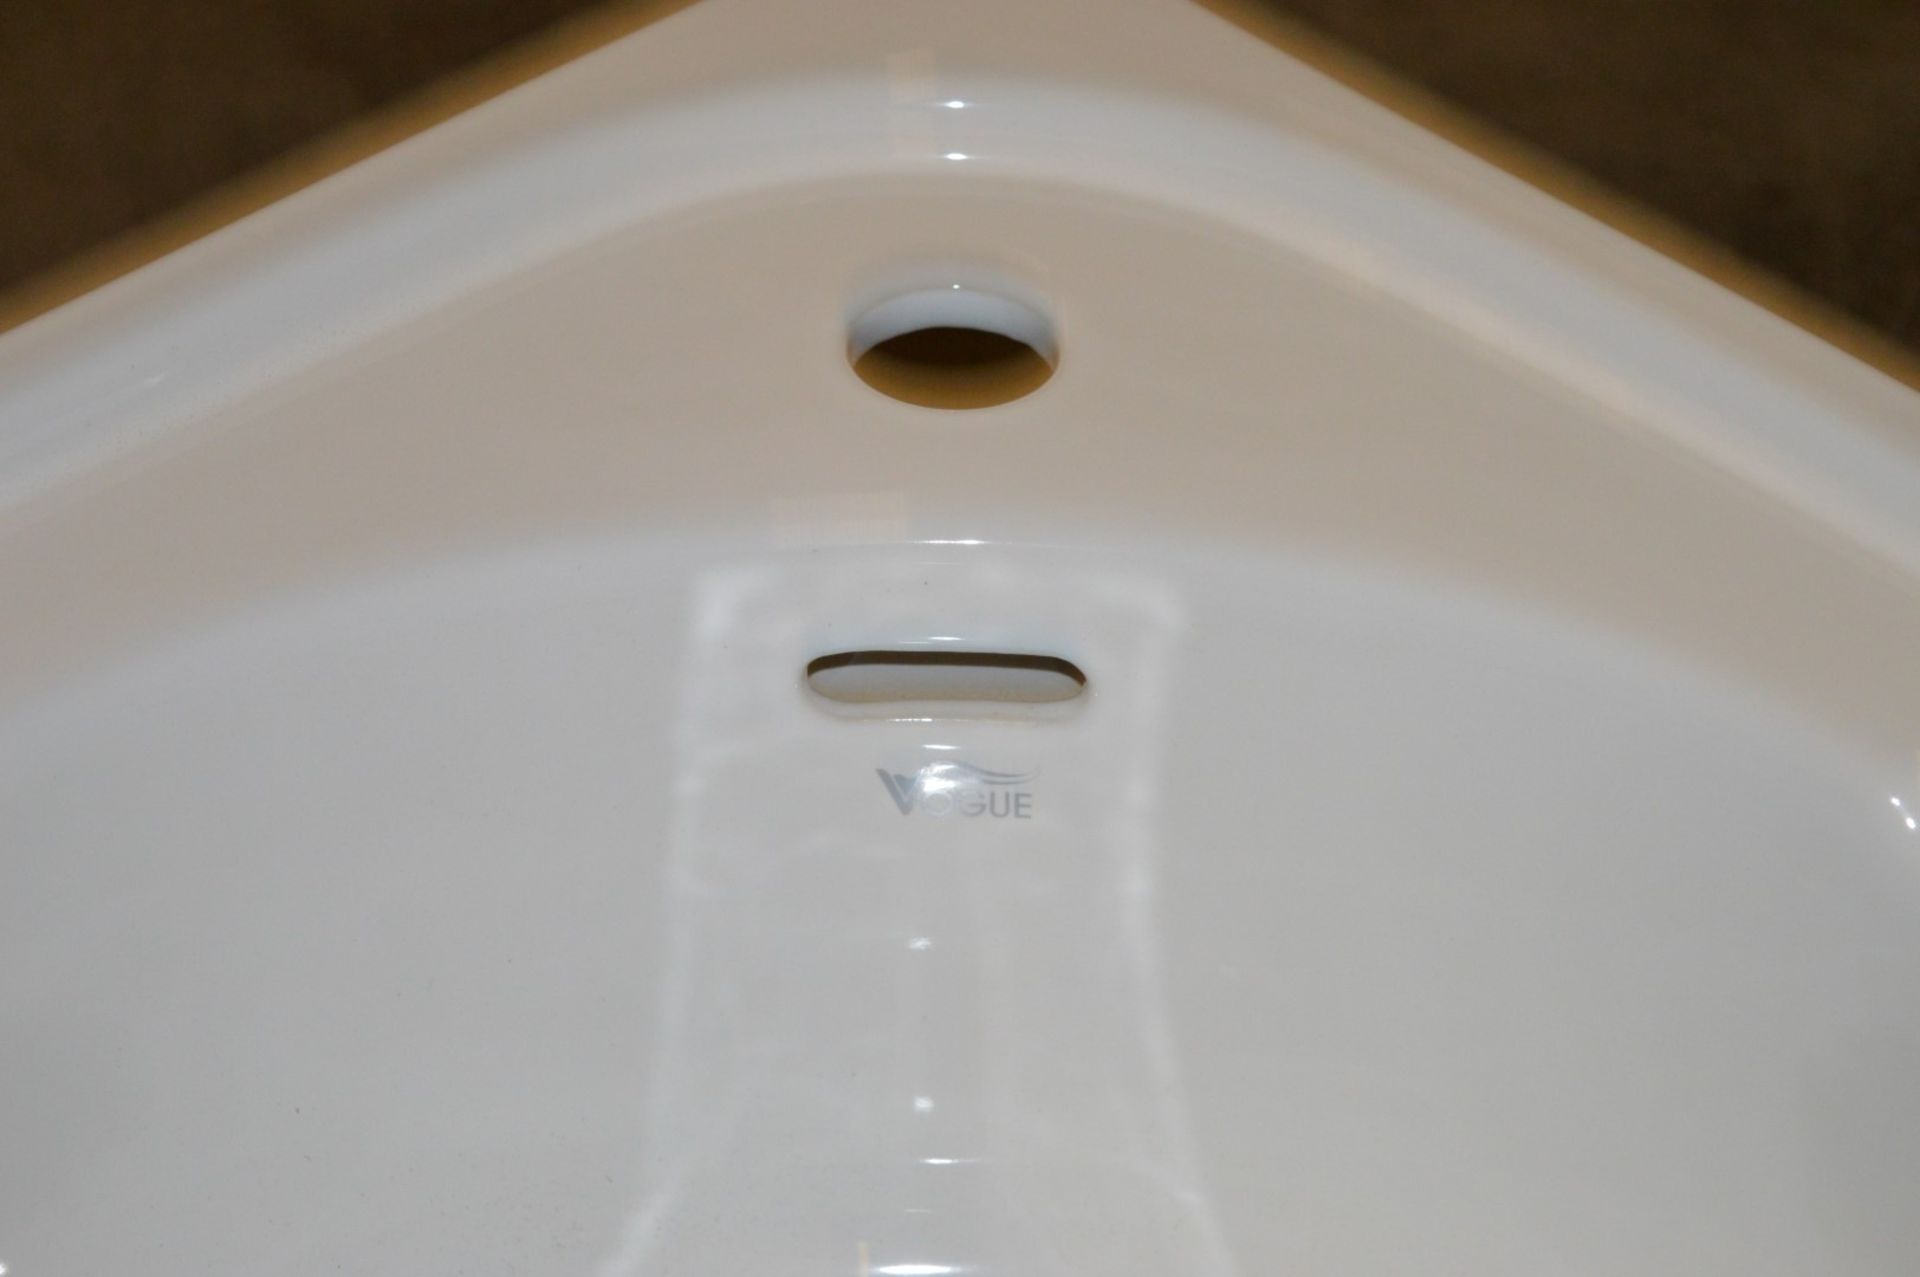 1 x Vogue Bathrooms KARIDI Single Tap Hole CORNER SINK BASIN - Brand New and Boxed - Sleek Modern - Image 3 of 4